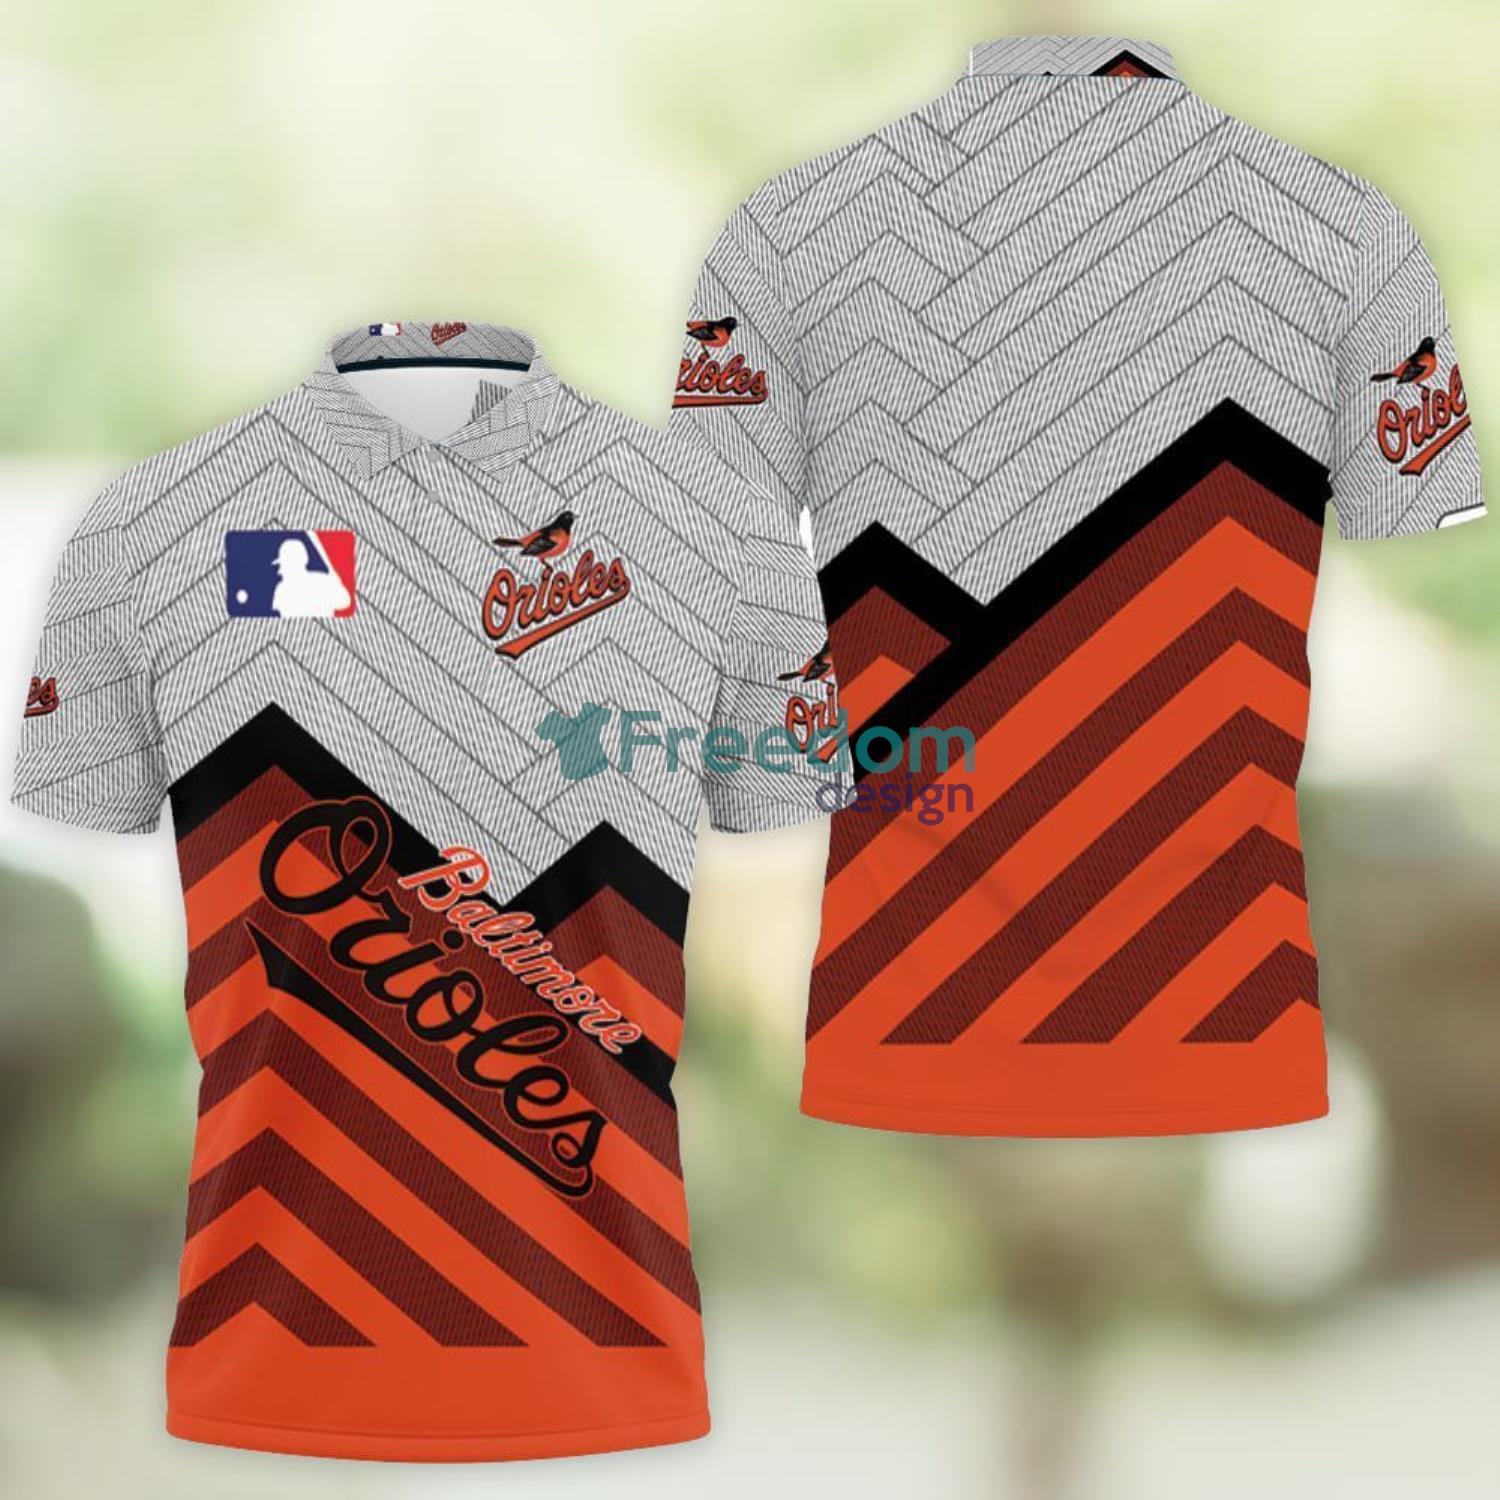 Baltimore Orioles Polo Shirt - Freedomdesign